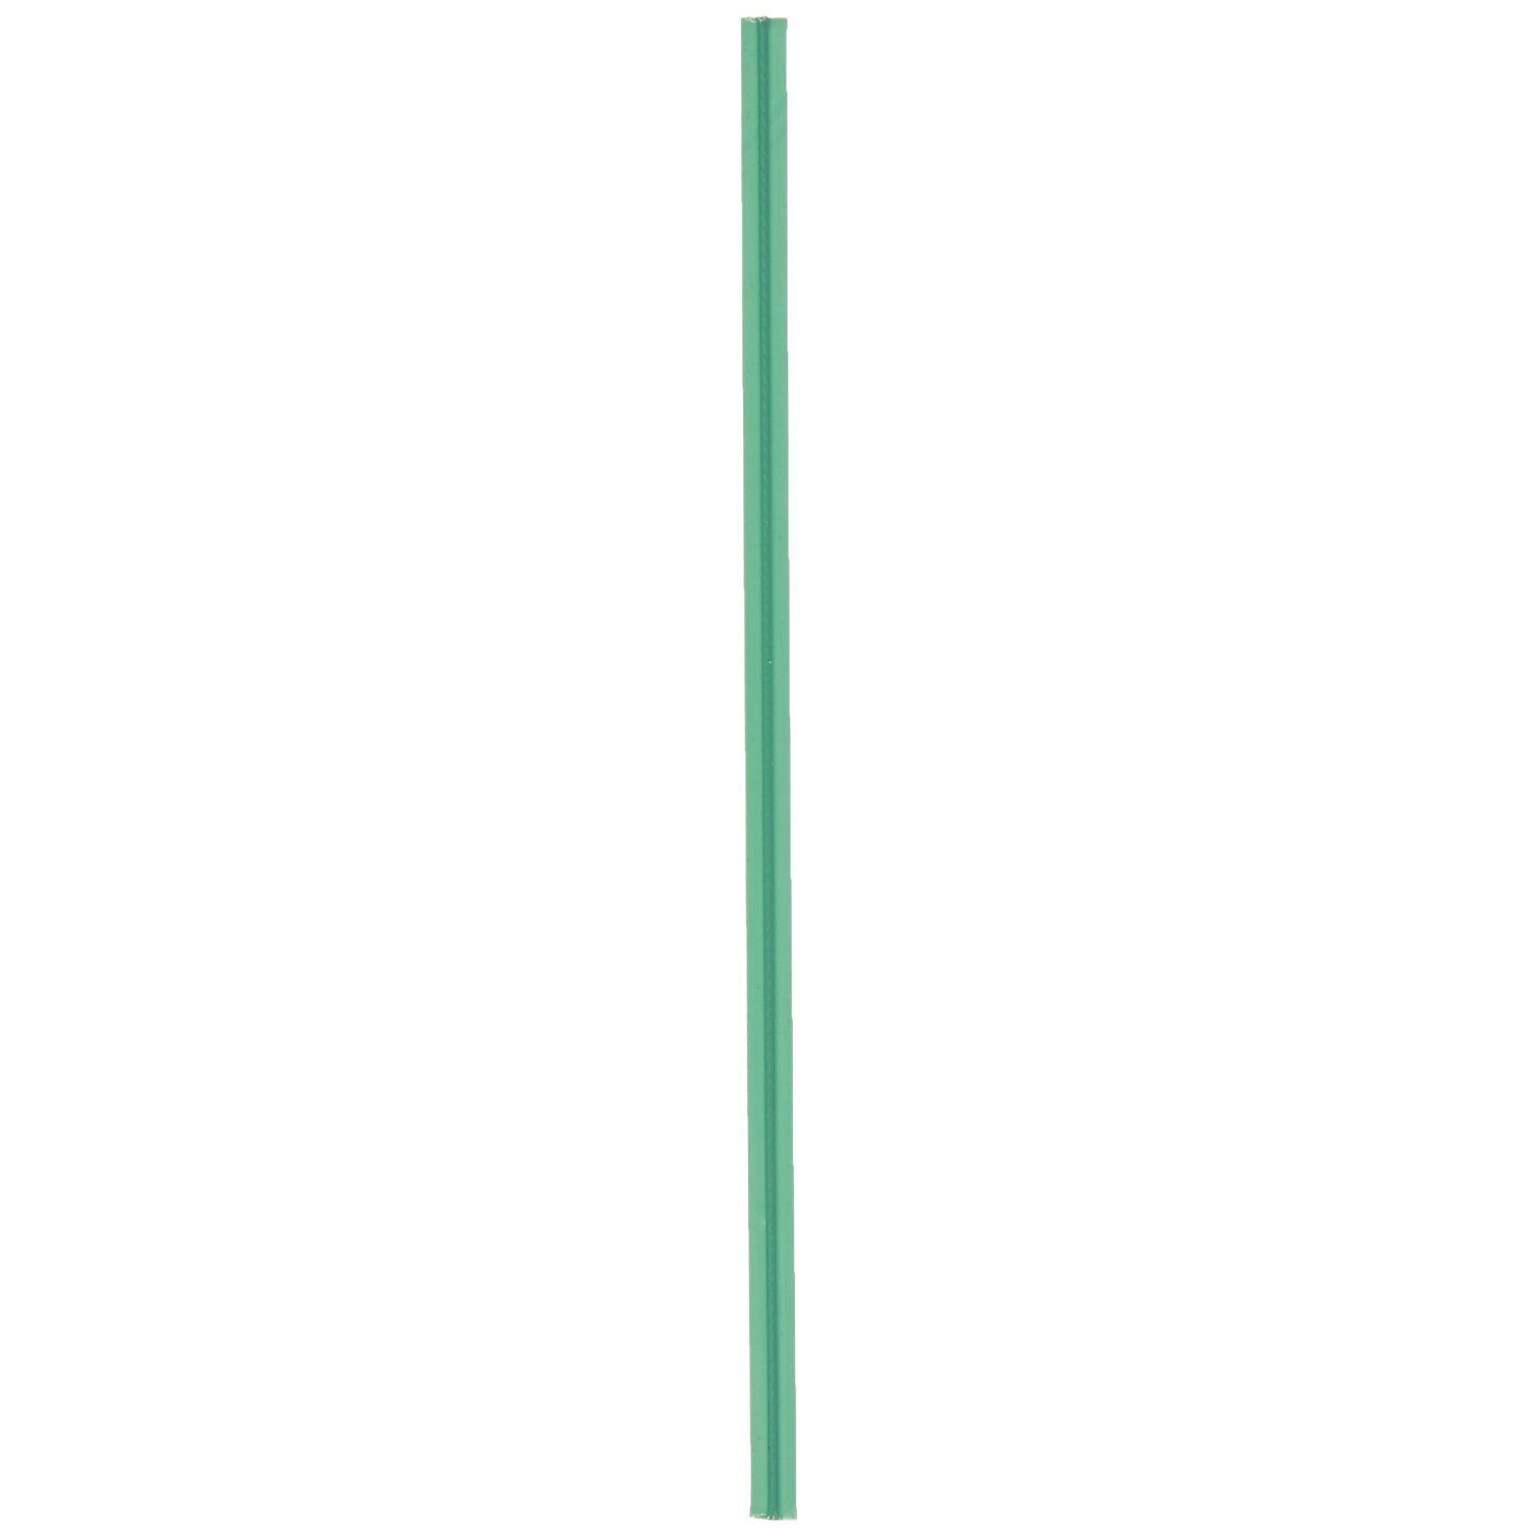 5 x 5/32 Staples Green Plastic Twist Tie, 2000/Case (PLT5G)